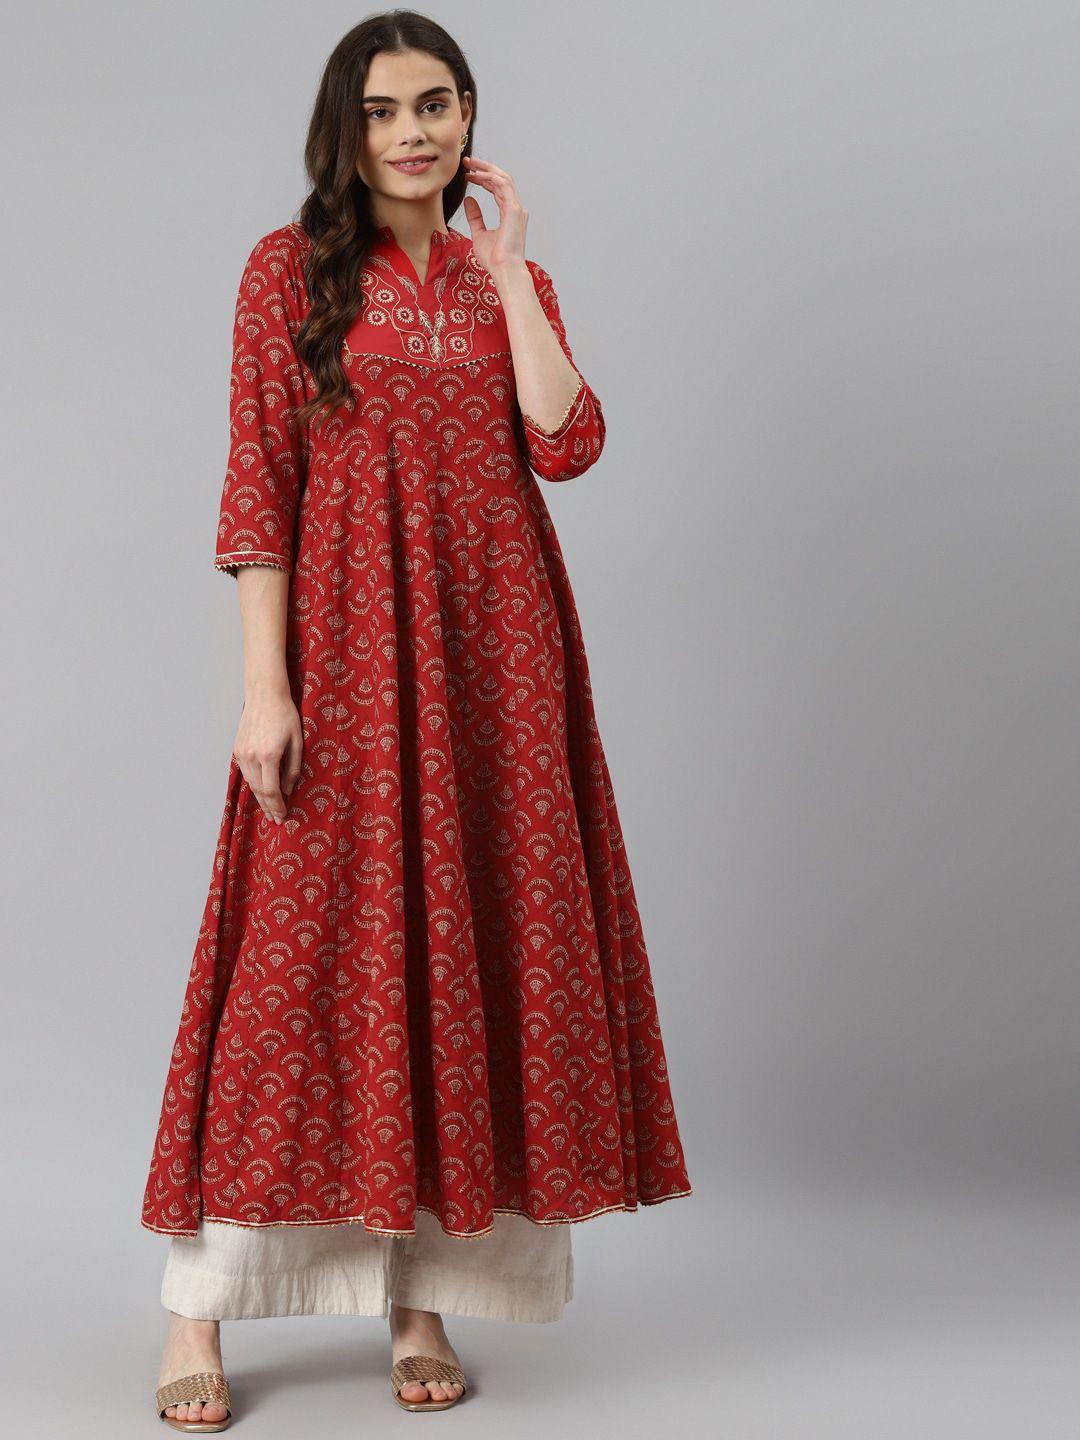 desi beats women red & gold ethnic motifs printed cotton anarkali kurta